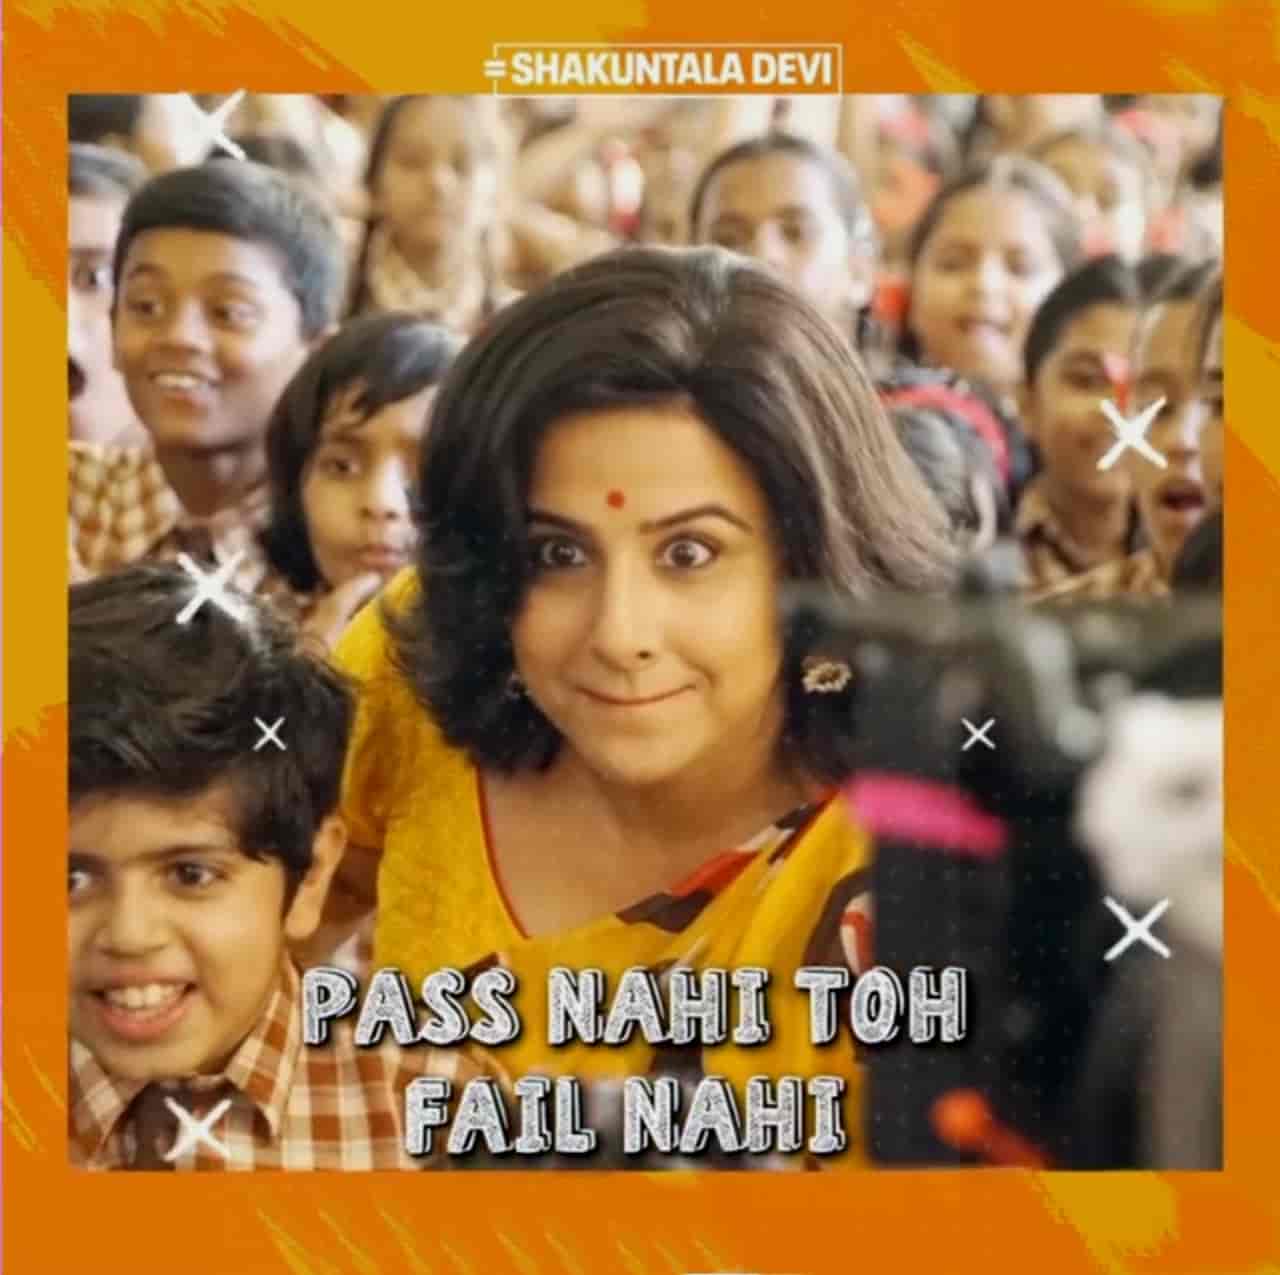 Pass Nahi Toh Fail Nahi Hindi Song Image From Movie Shakuntala Devi Features Vidya Balan